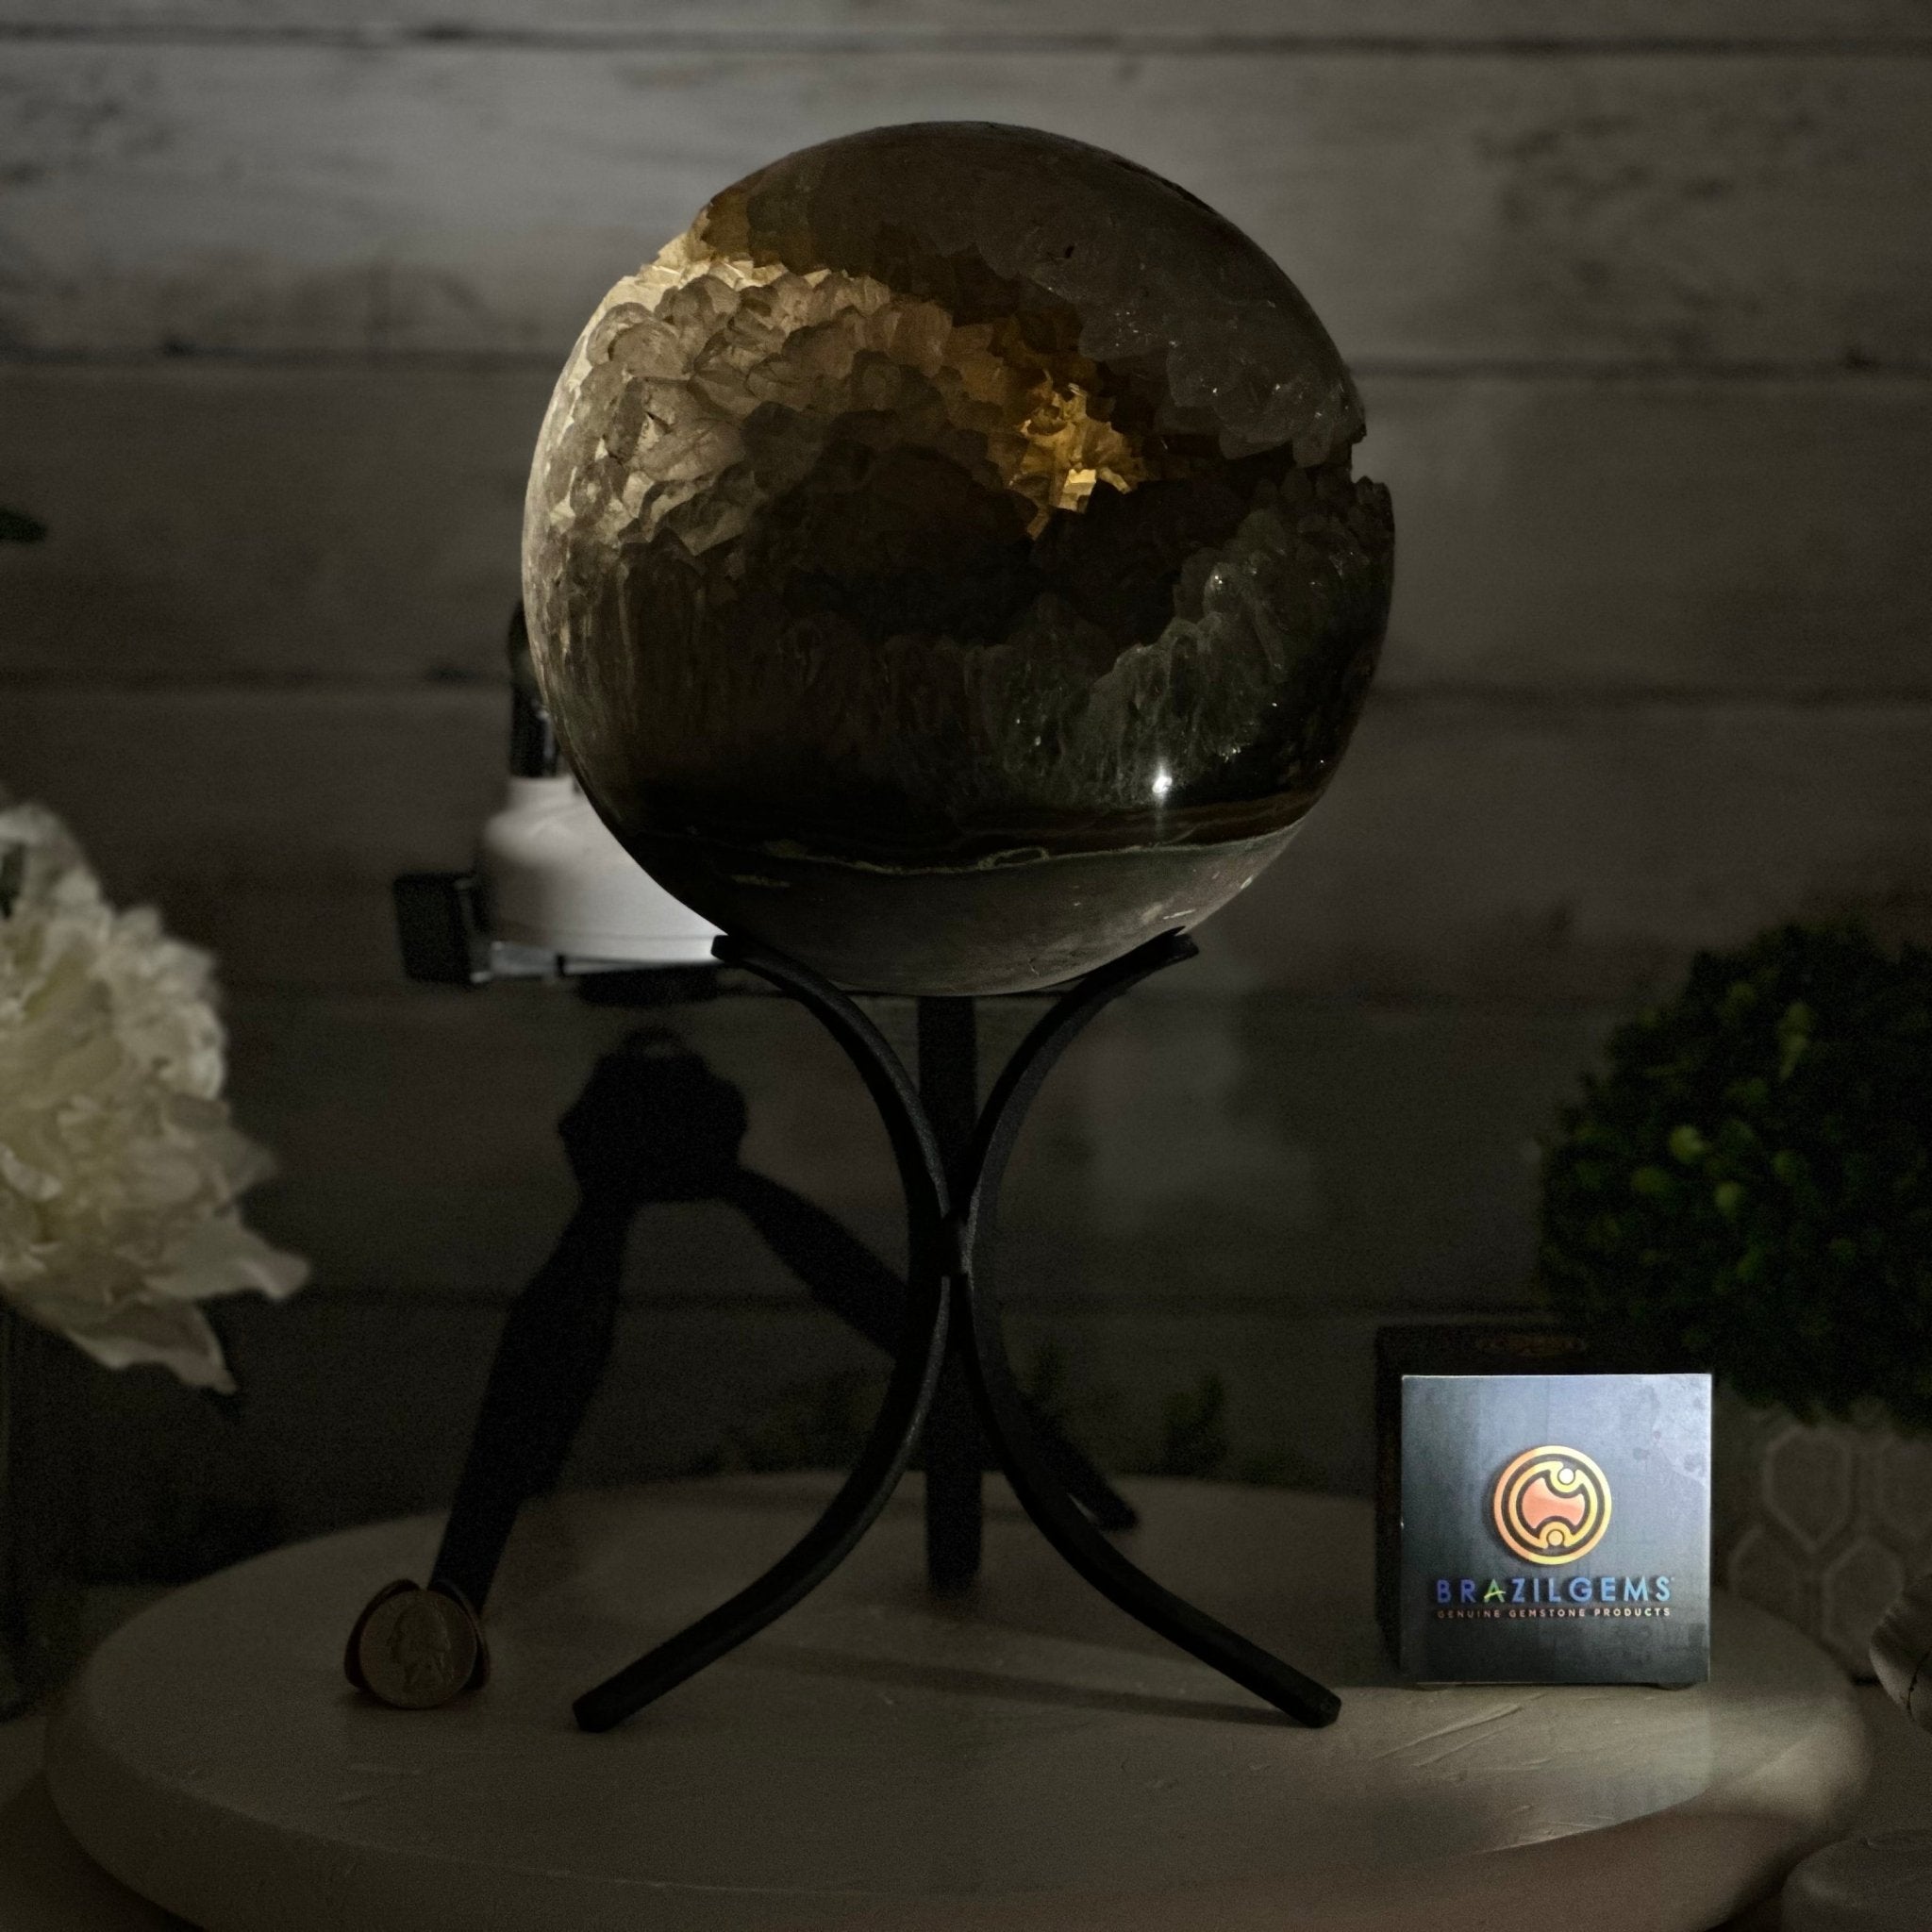 Druzy White Amethyst Sphere on a Metal Base, 14.7 lbs & 12.7" Tall #5630-0075 - Brazil GemsBrazil GemsDruzy White Amethyst Sphere on a Metal Base, 14.7 lbs & 12.7" Tall #5630-0075Spheres5630-0075